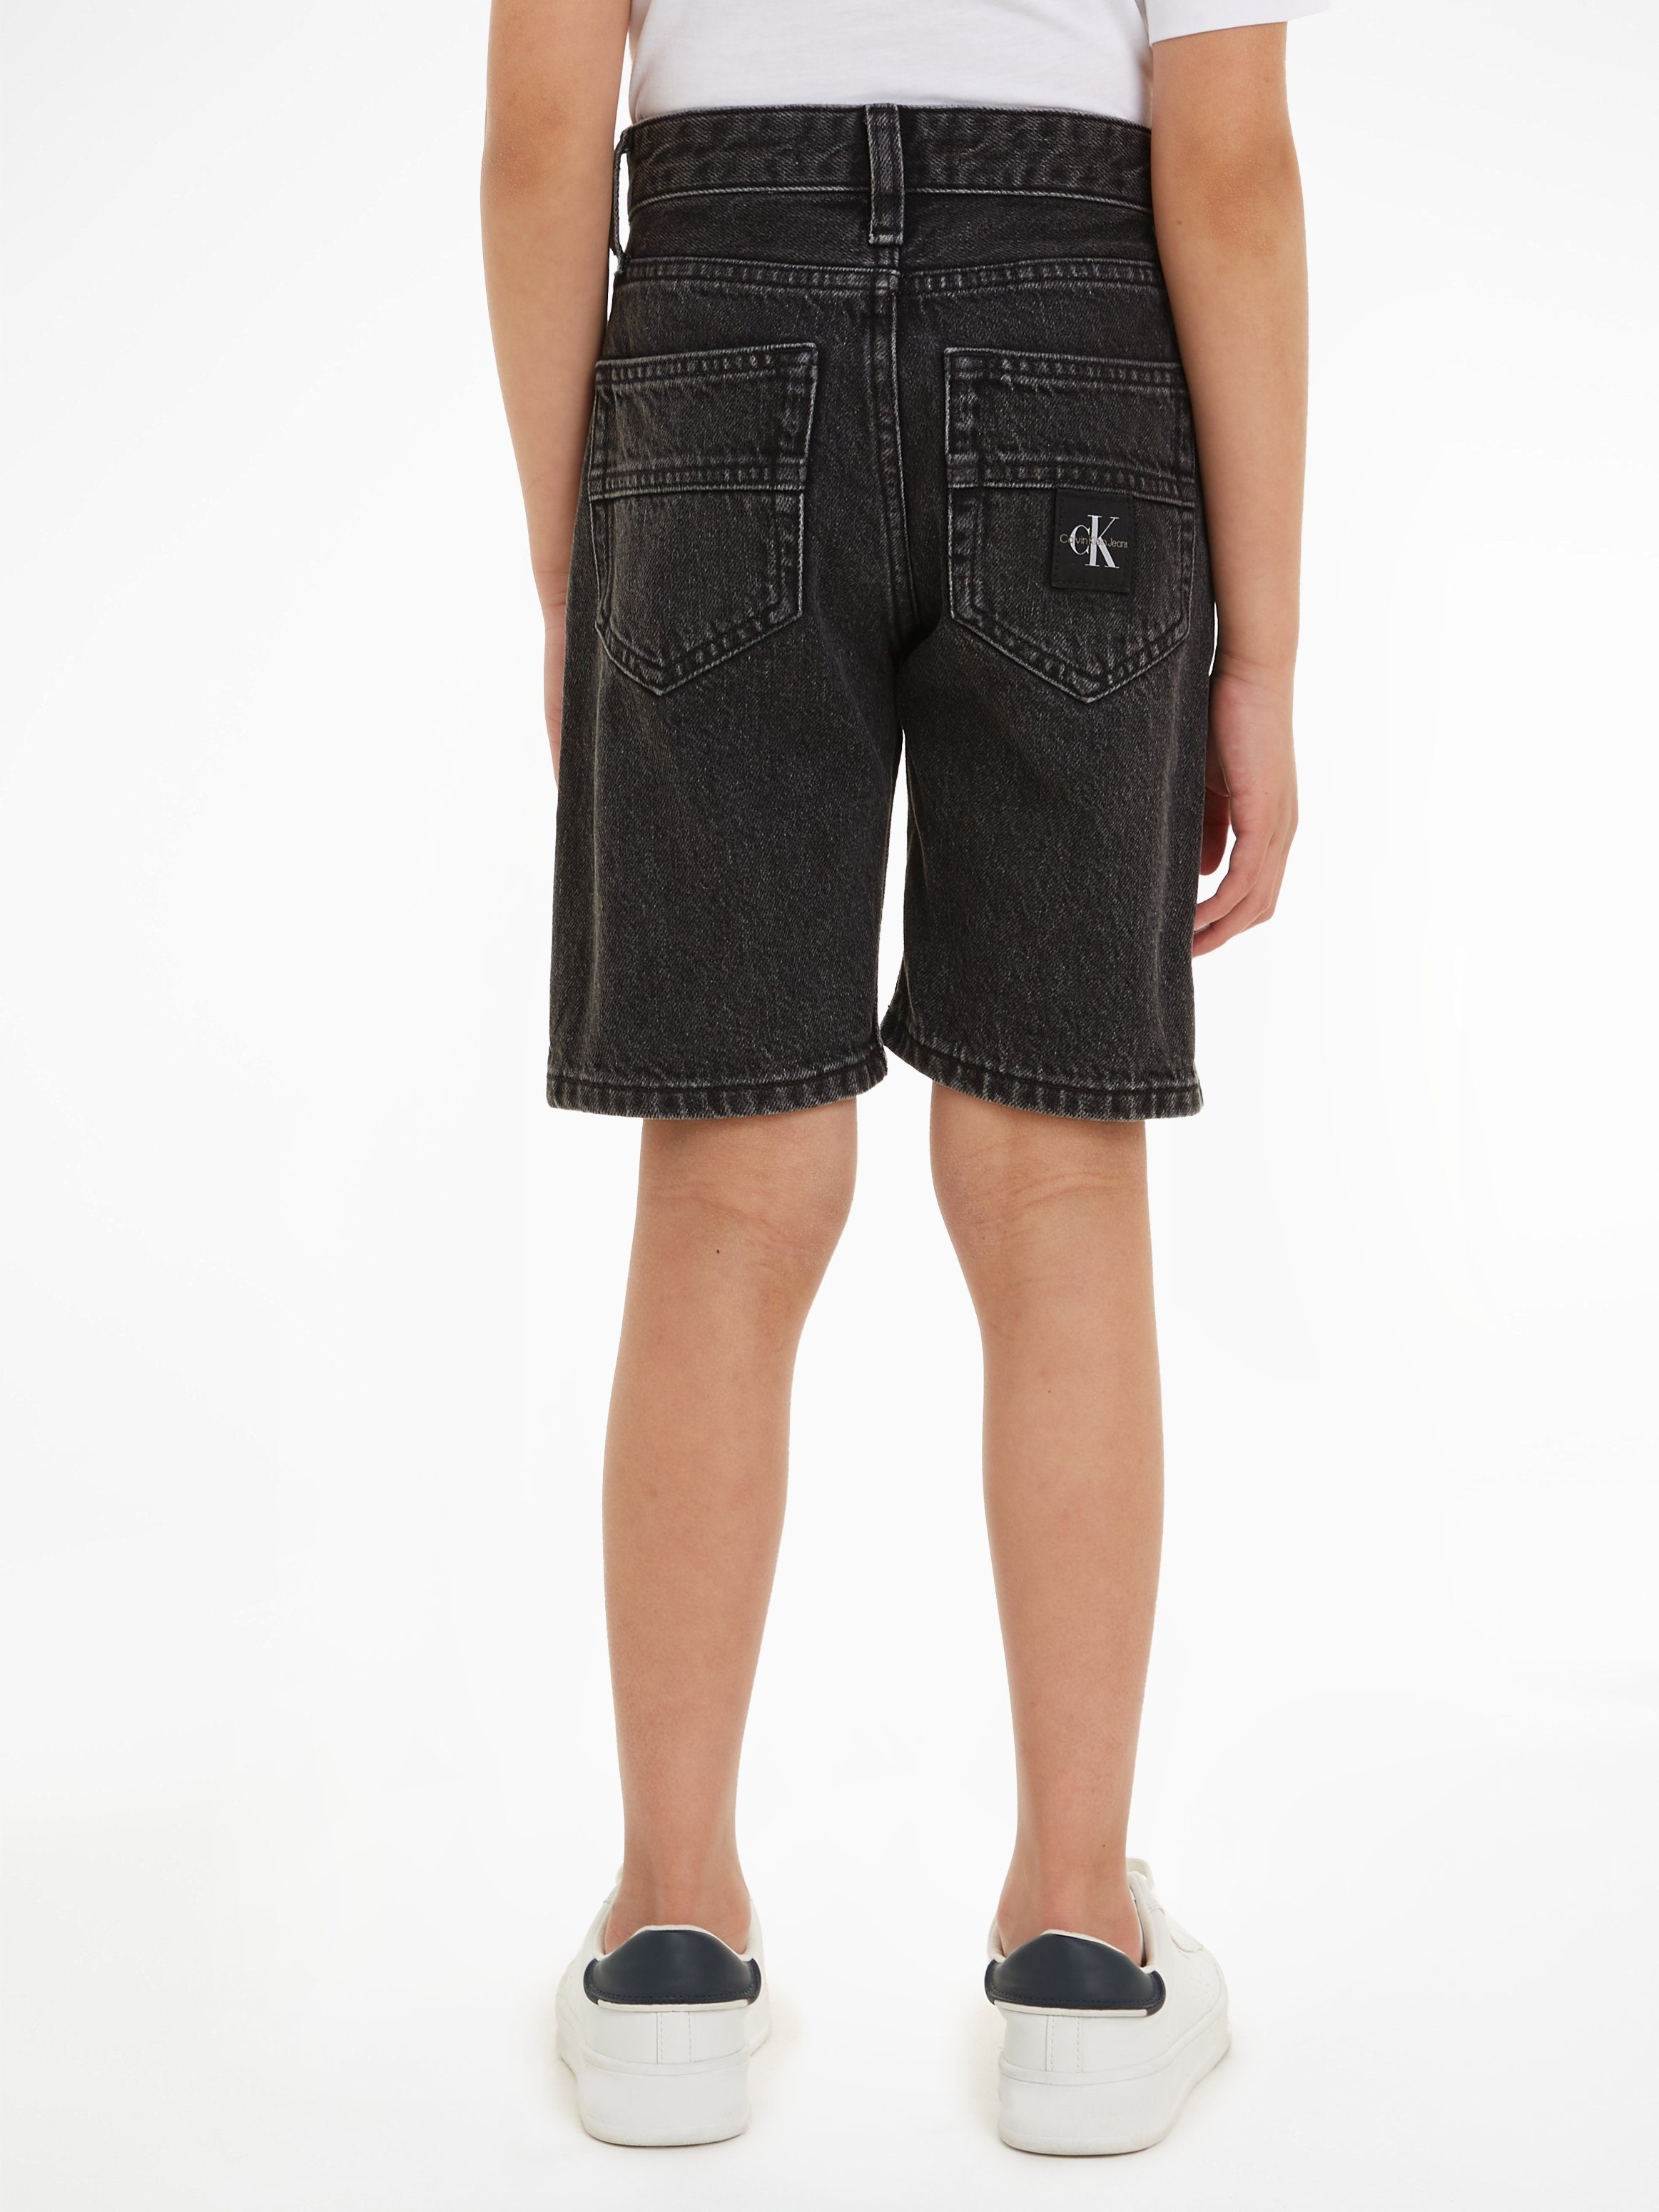 Shorts im RELAXED Klein Calvin SHORTS DENIM 5-Poket-Style Jeans